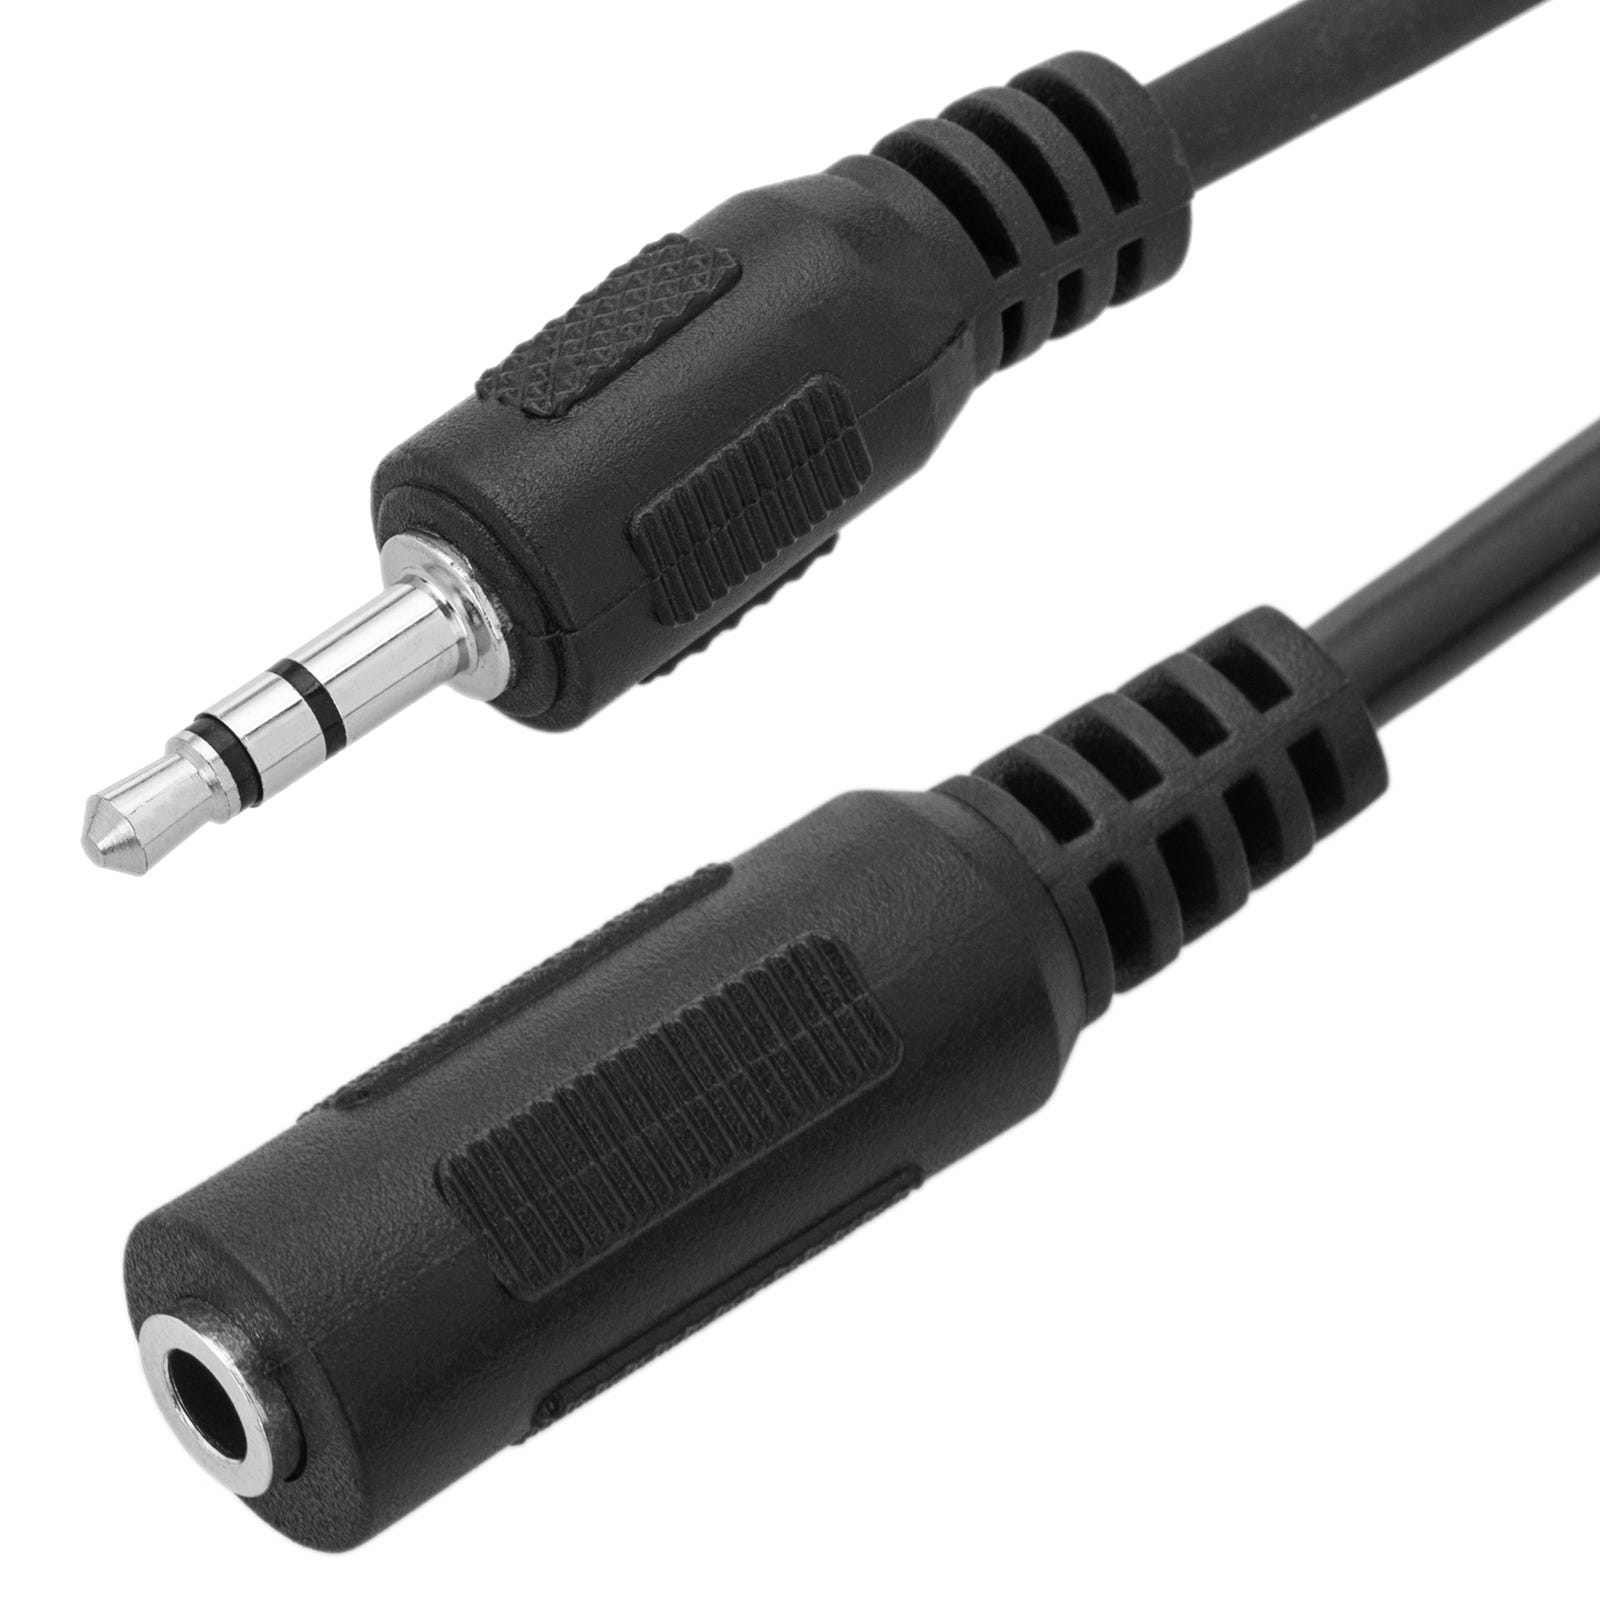 Comprar Cable Jack 3.5 Macho a Jack 3.5 Hembra de 3 m Online